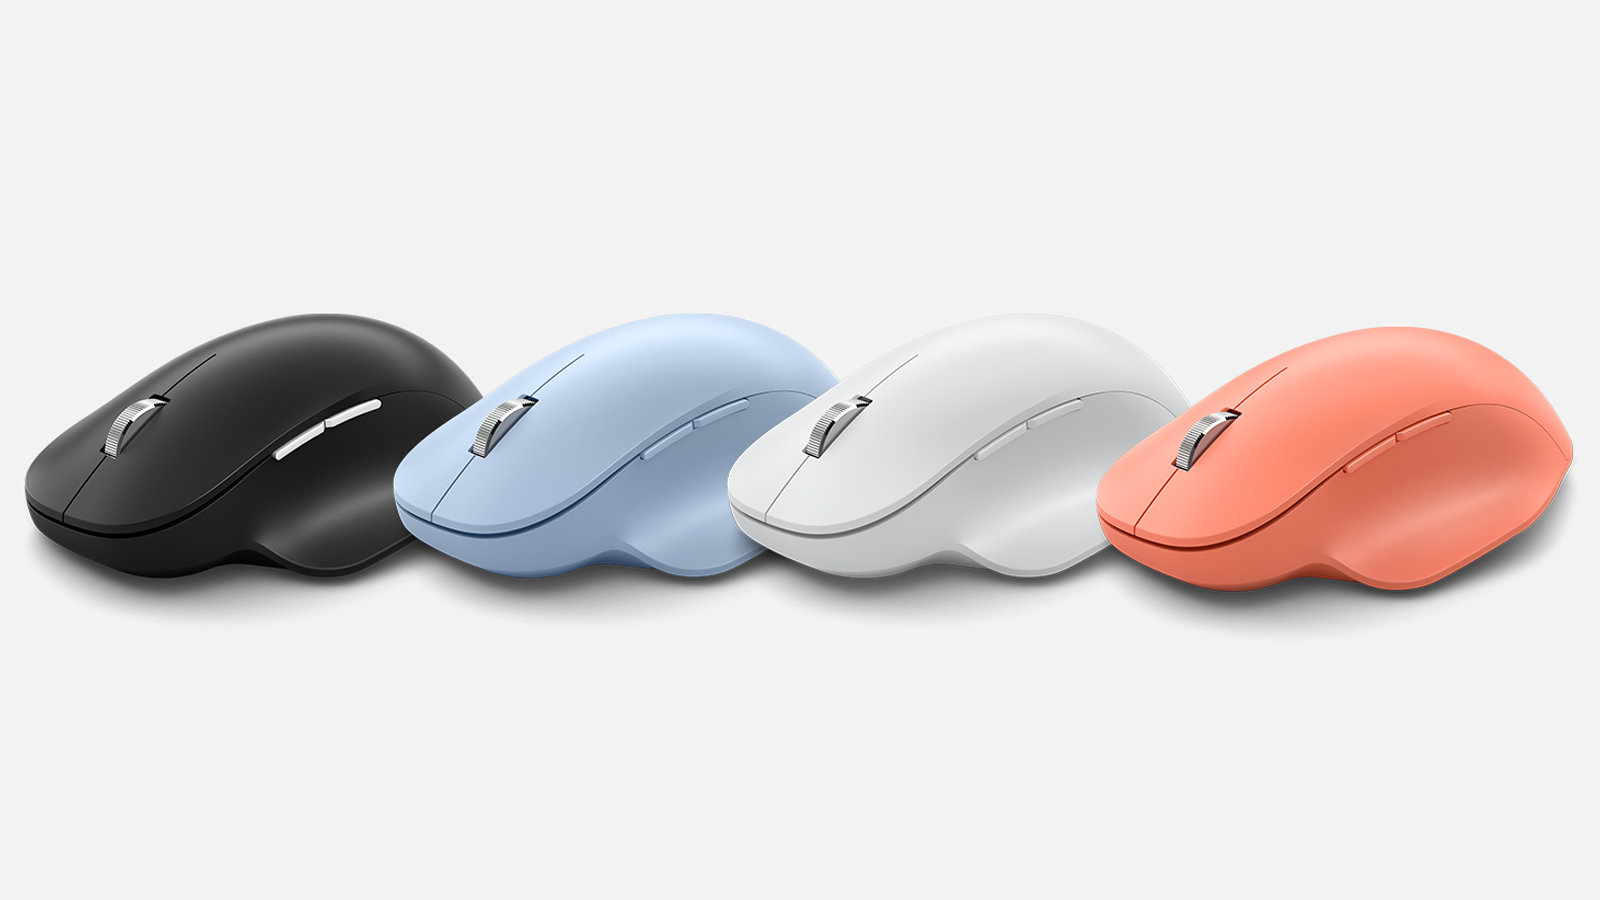 Microsoft bluetooth ergonomic mouse - souris bluetooth ergonomique - bleu  pastel MICROSOFT